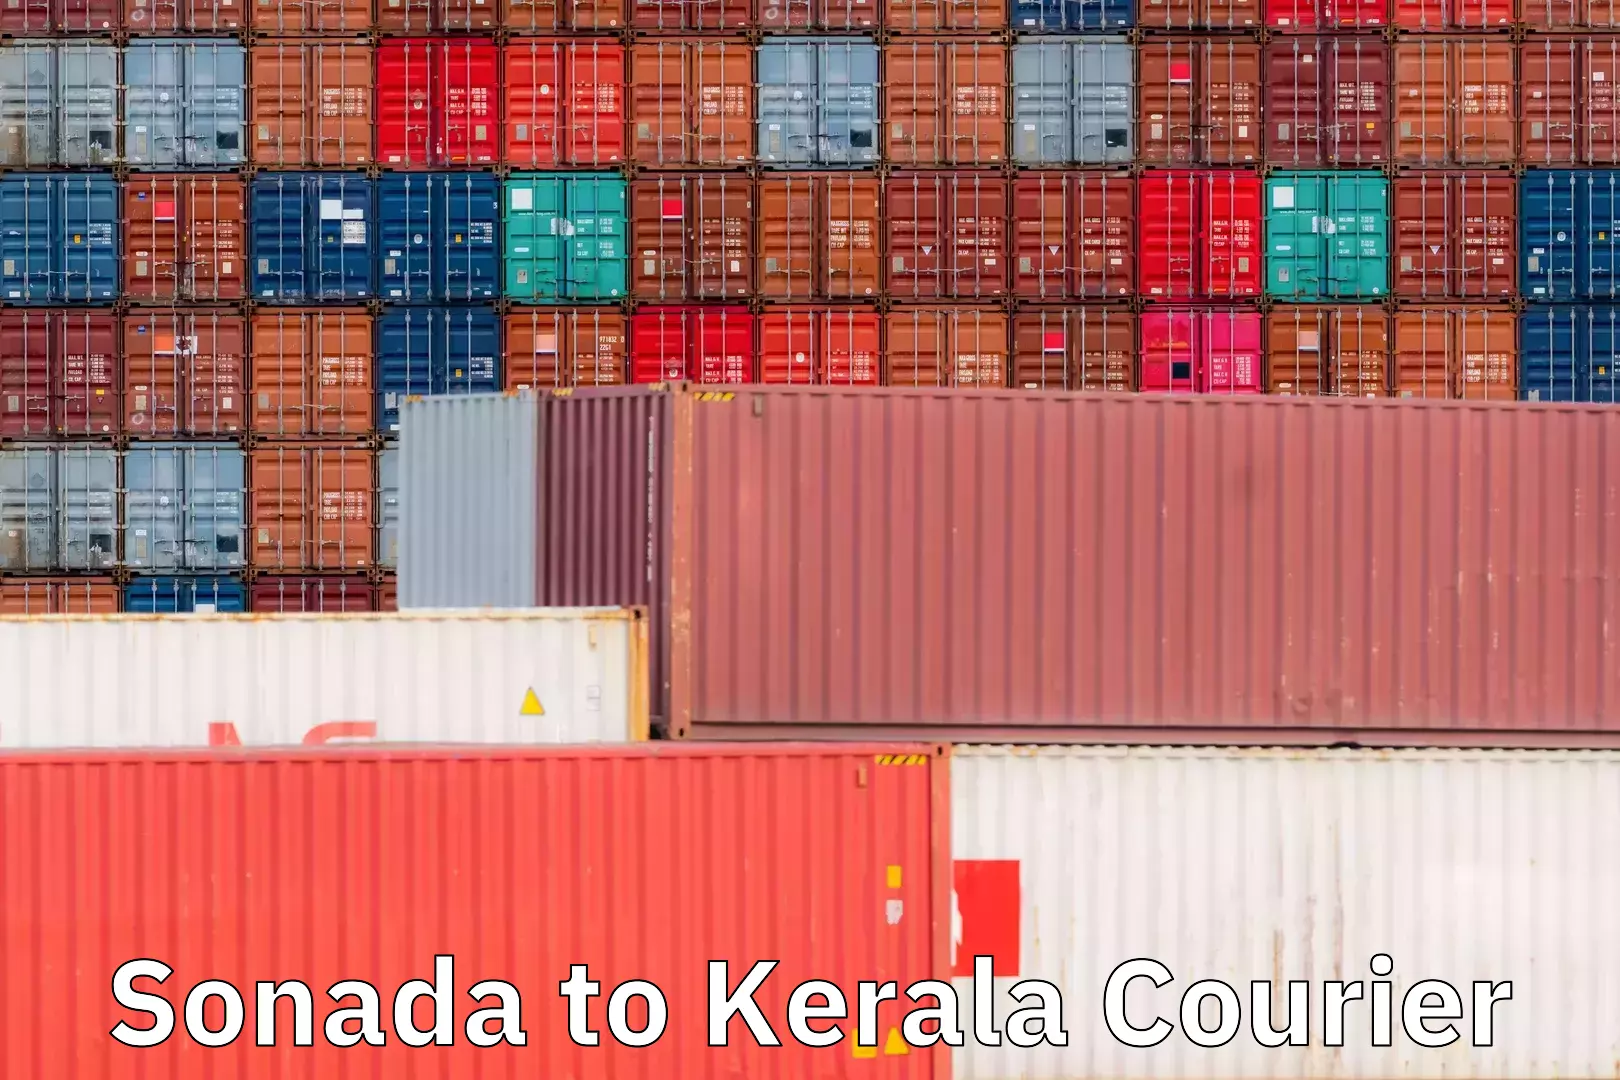 Express delivery capabilities Sonada to Kerala